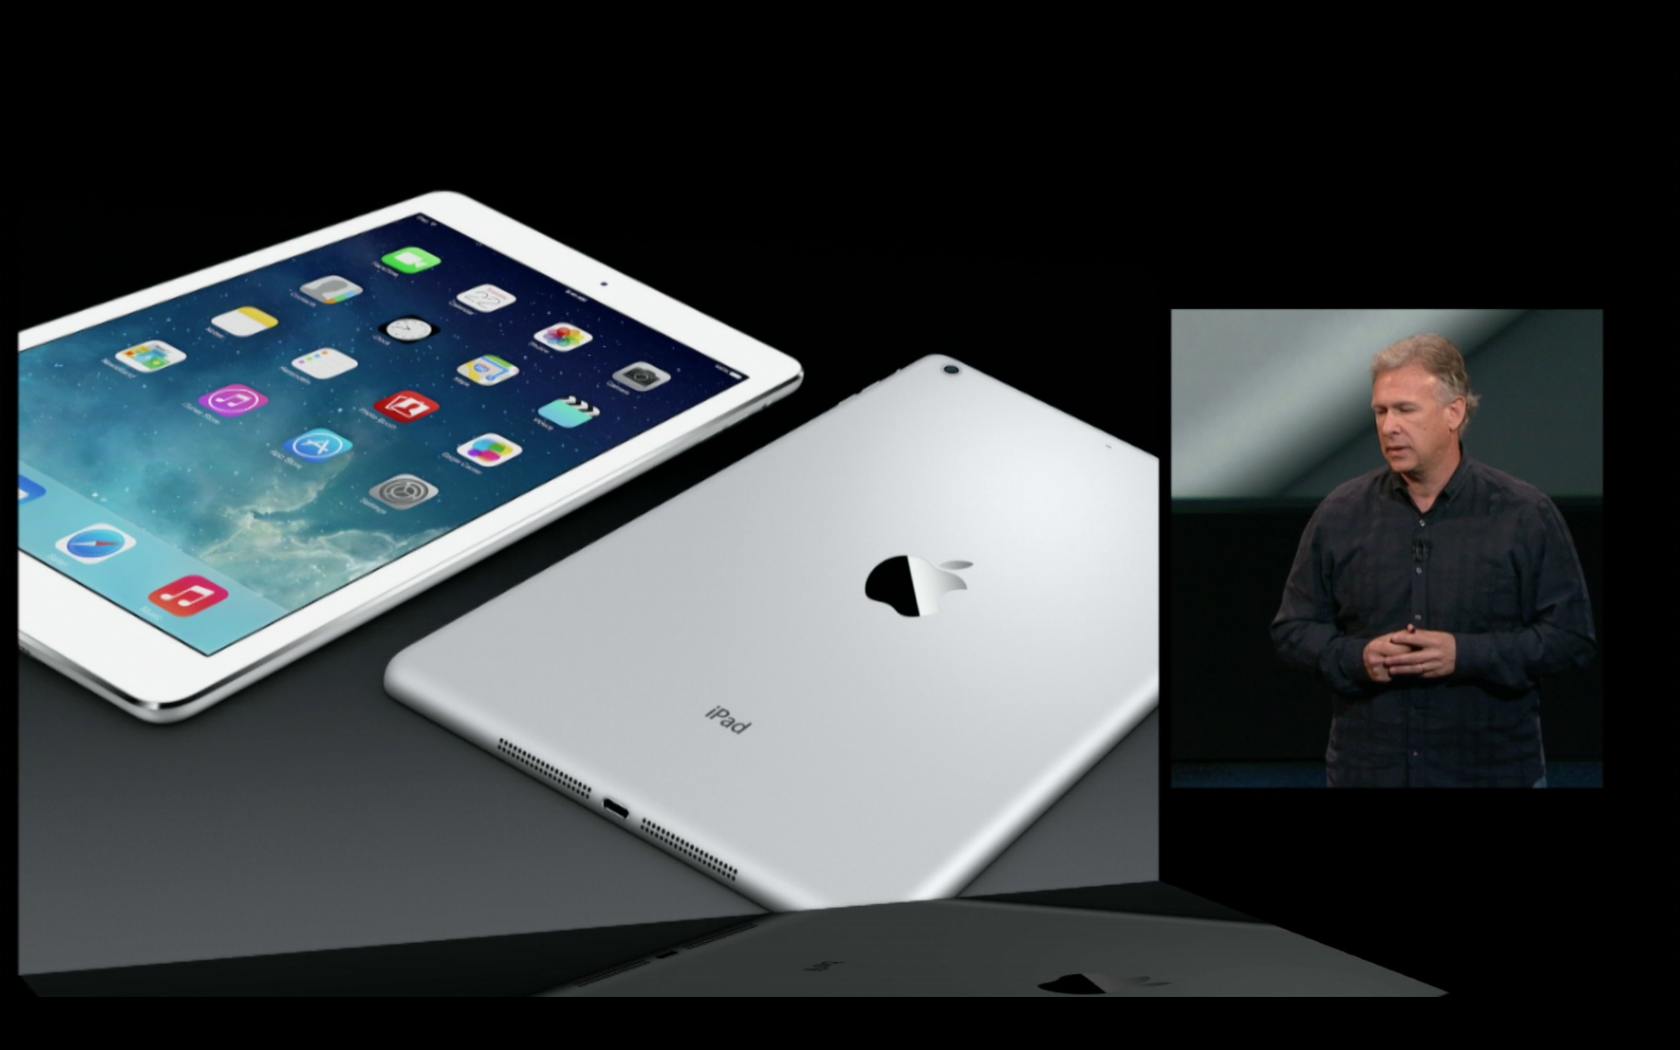 iPad Air (iPad 5) Release Date & Price Confirmed